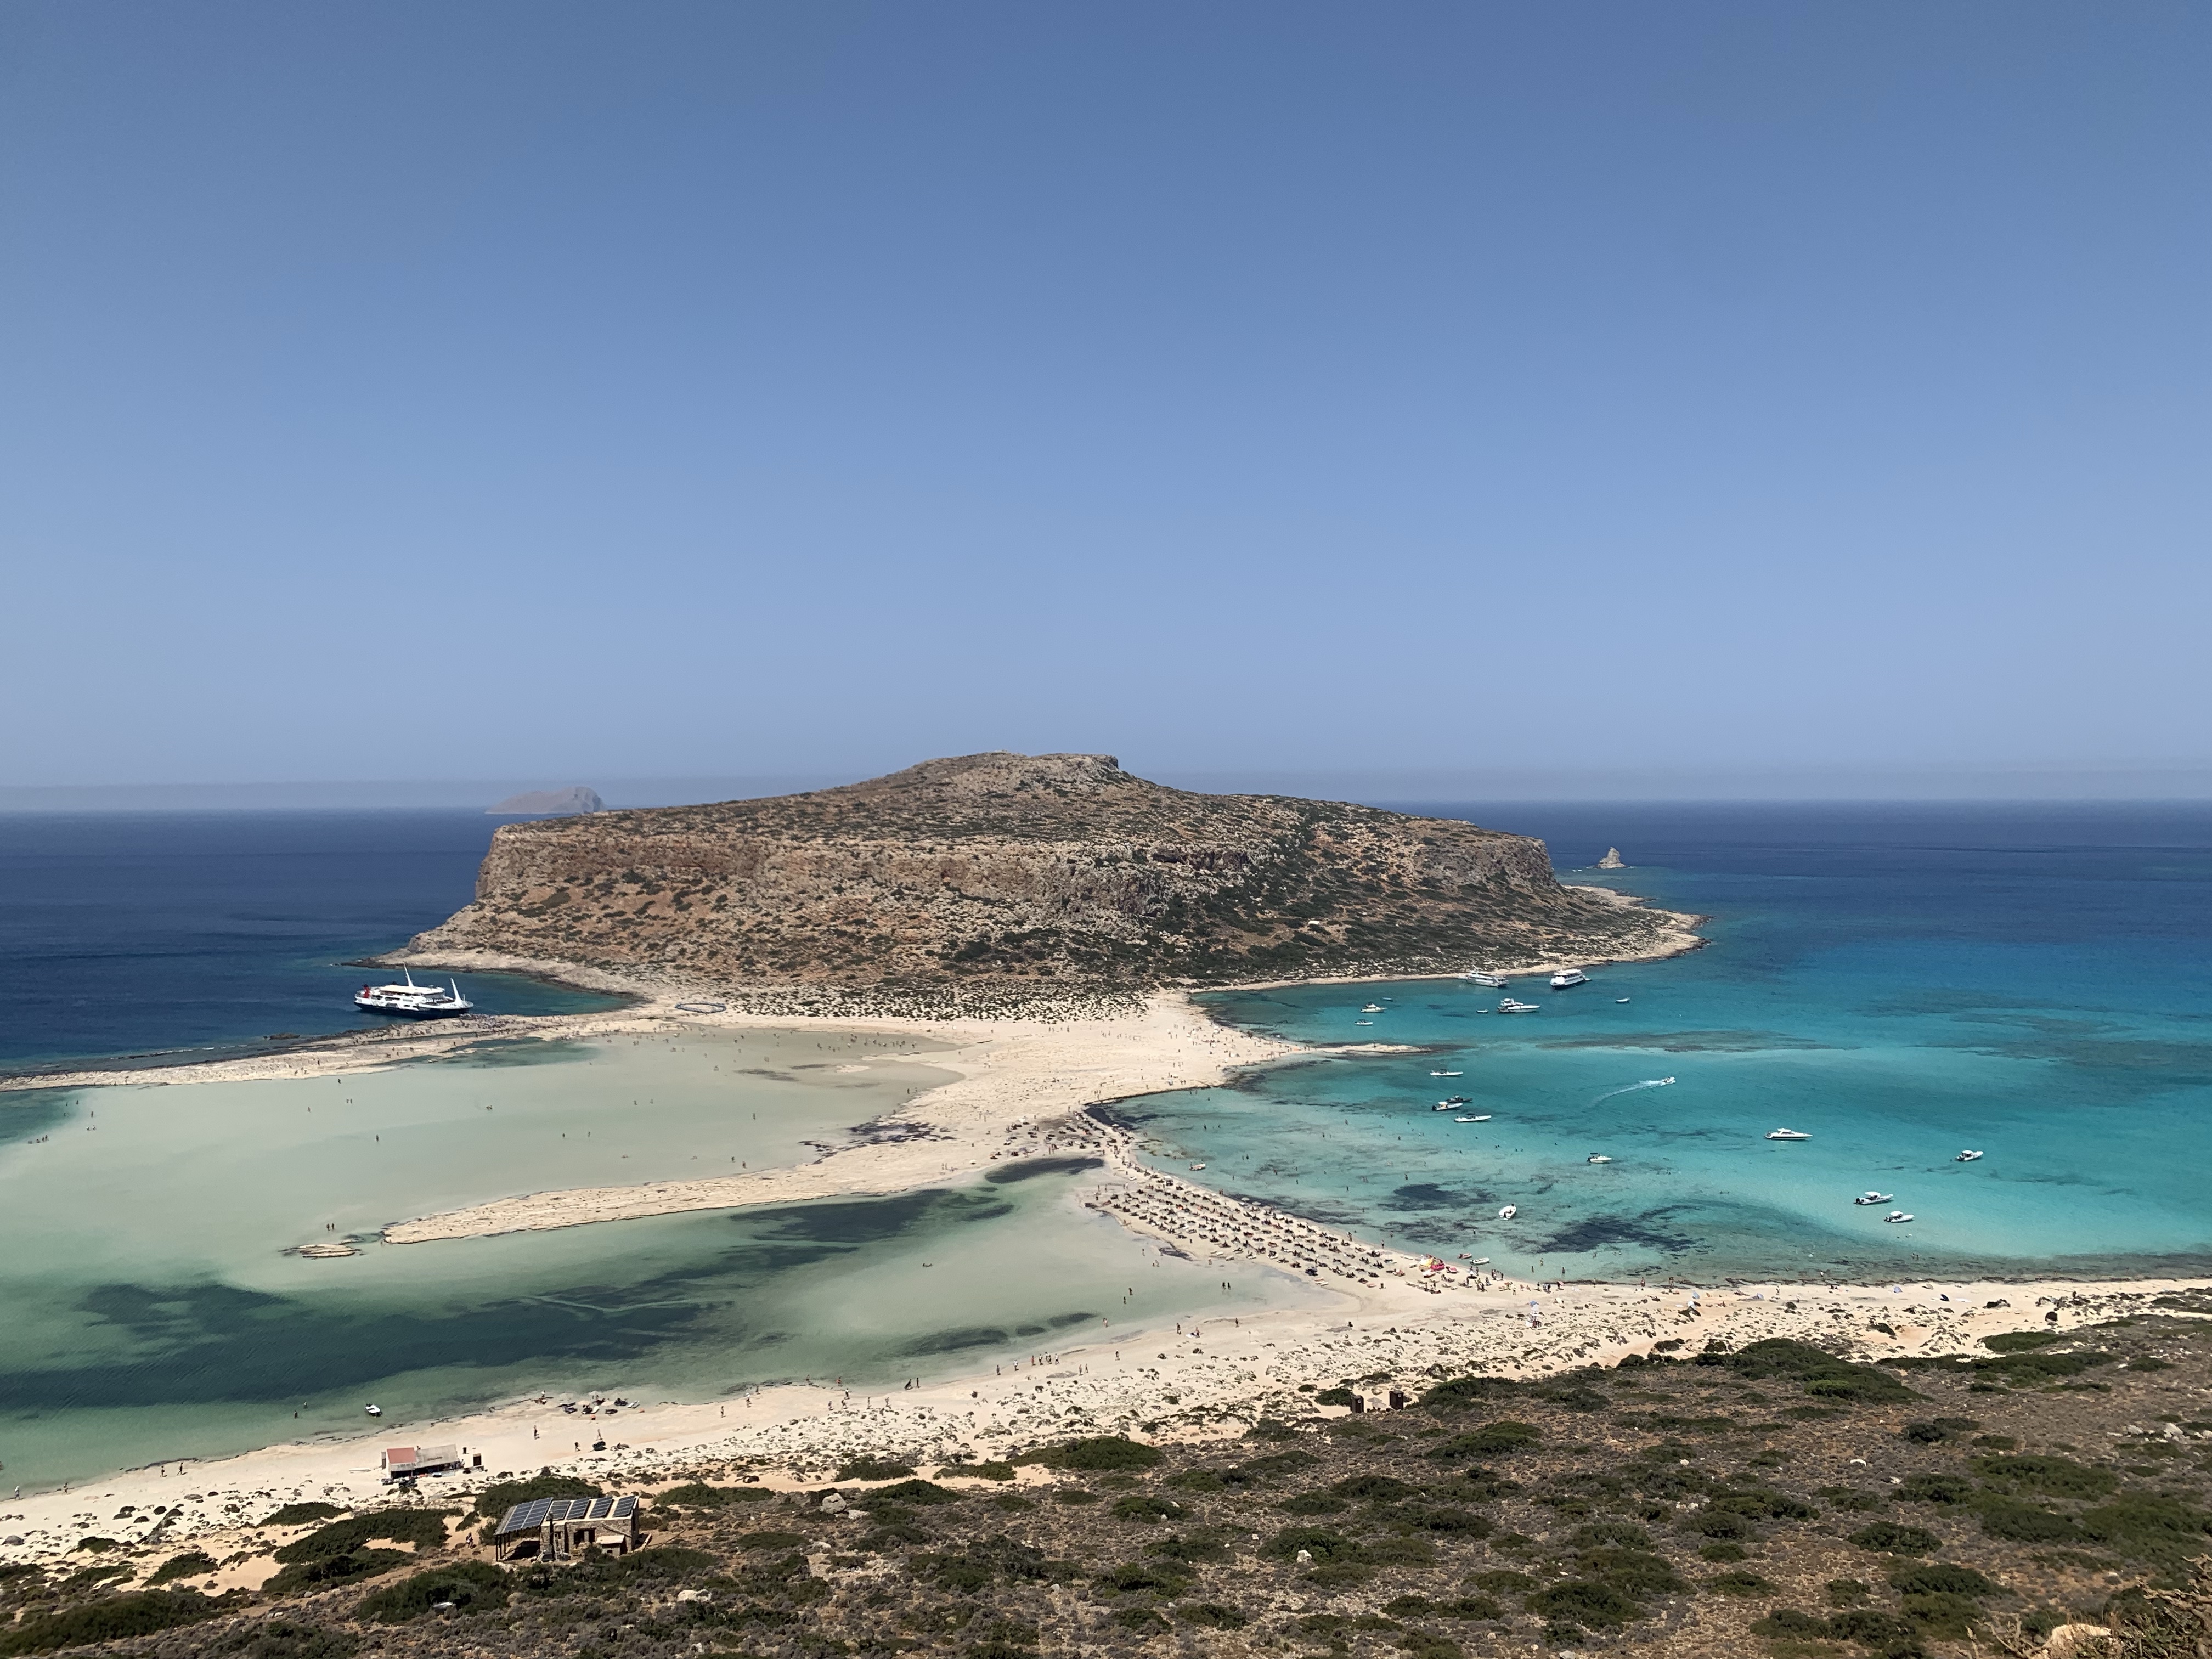 avis sur voyage en crete